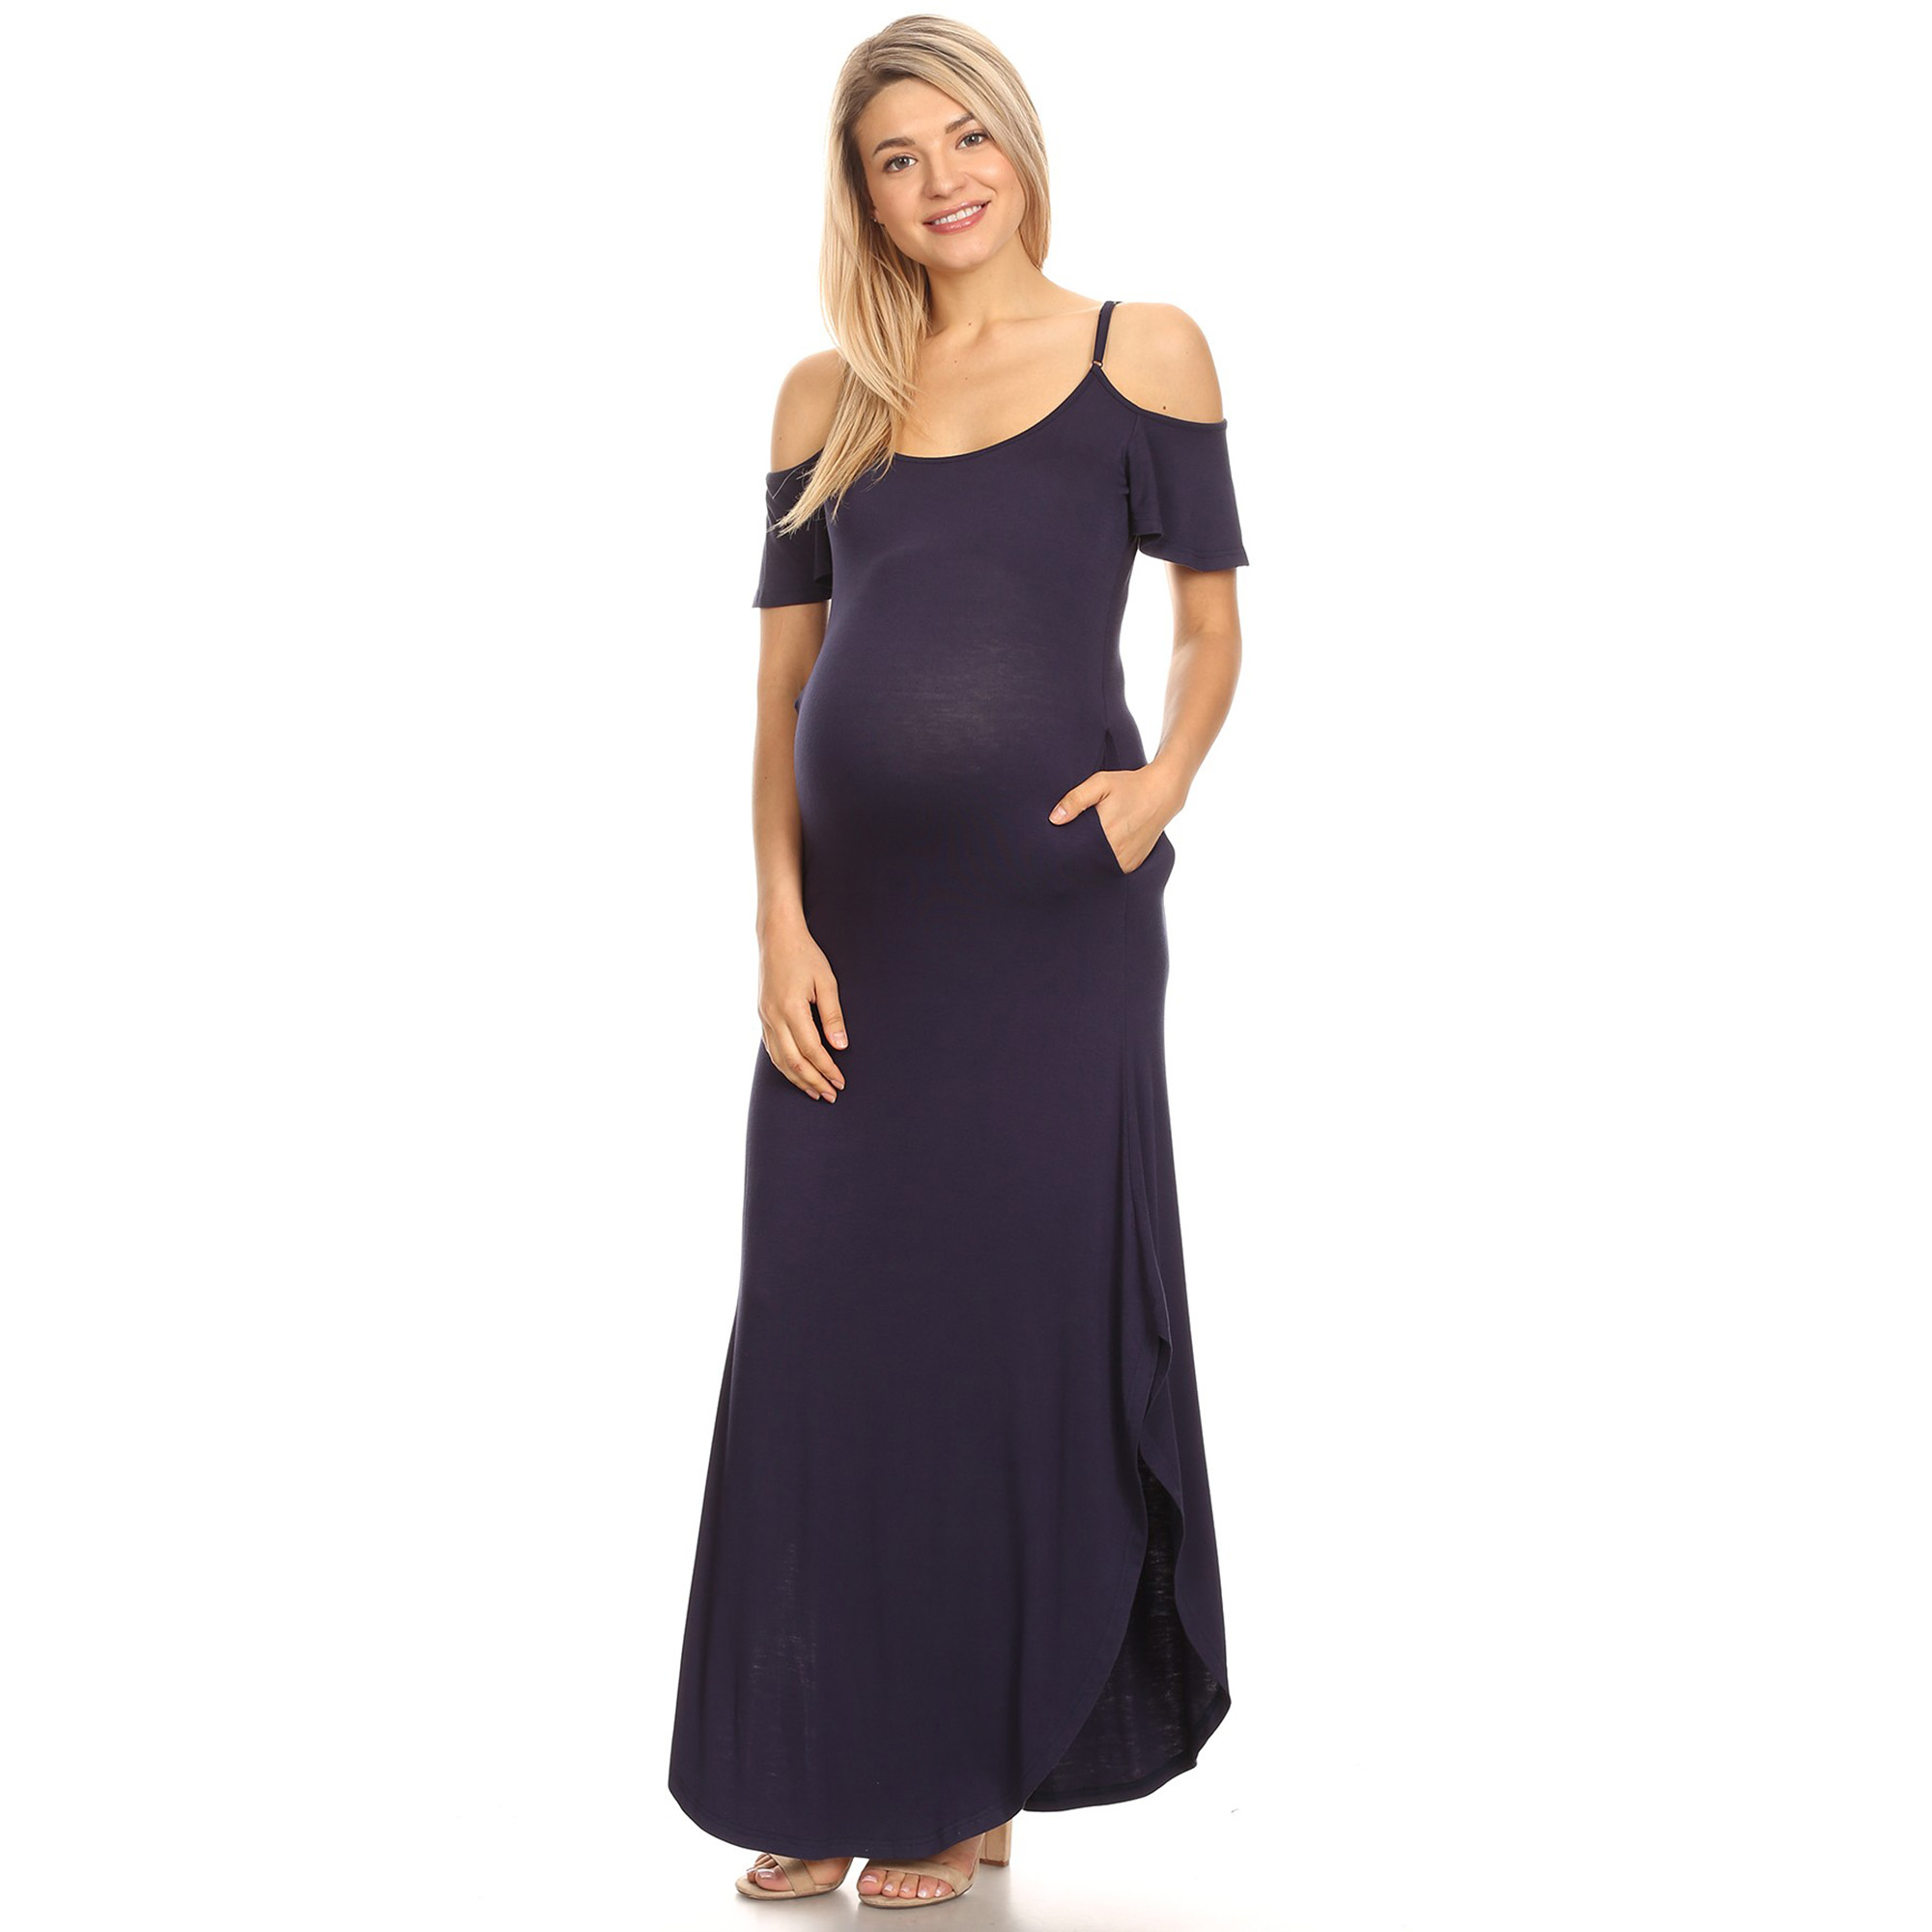 White Mark Women's Maternity Cold Shoulder Maxi Dress - Navy, 1X